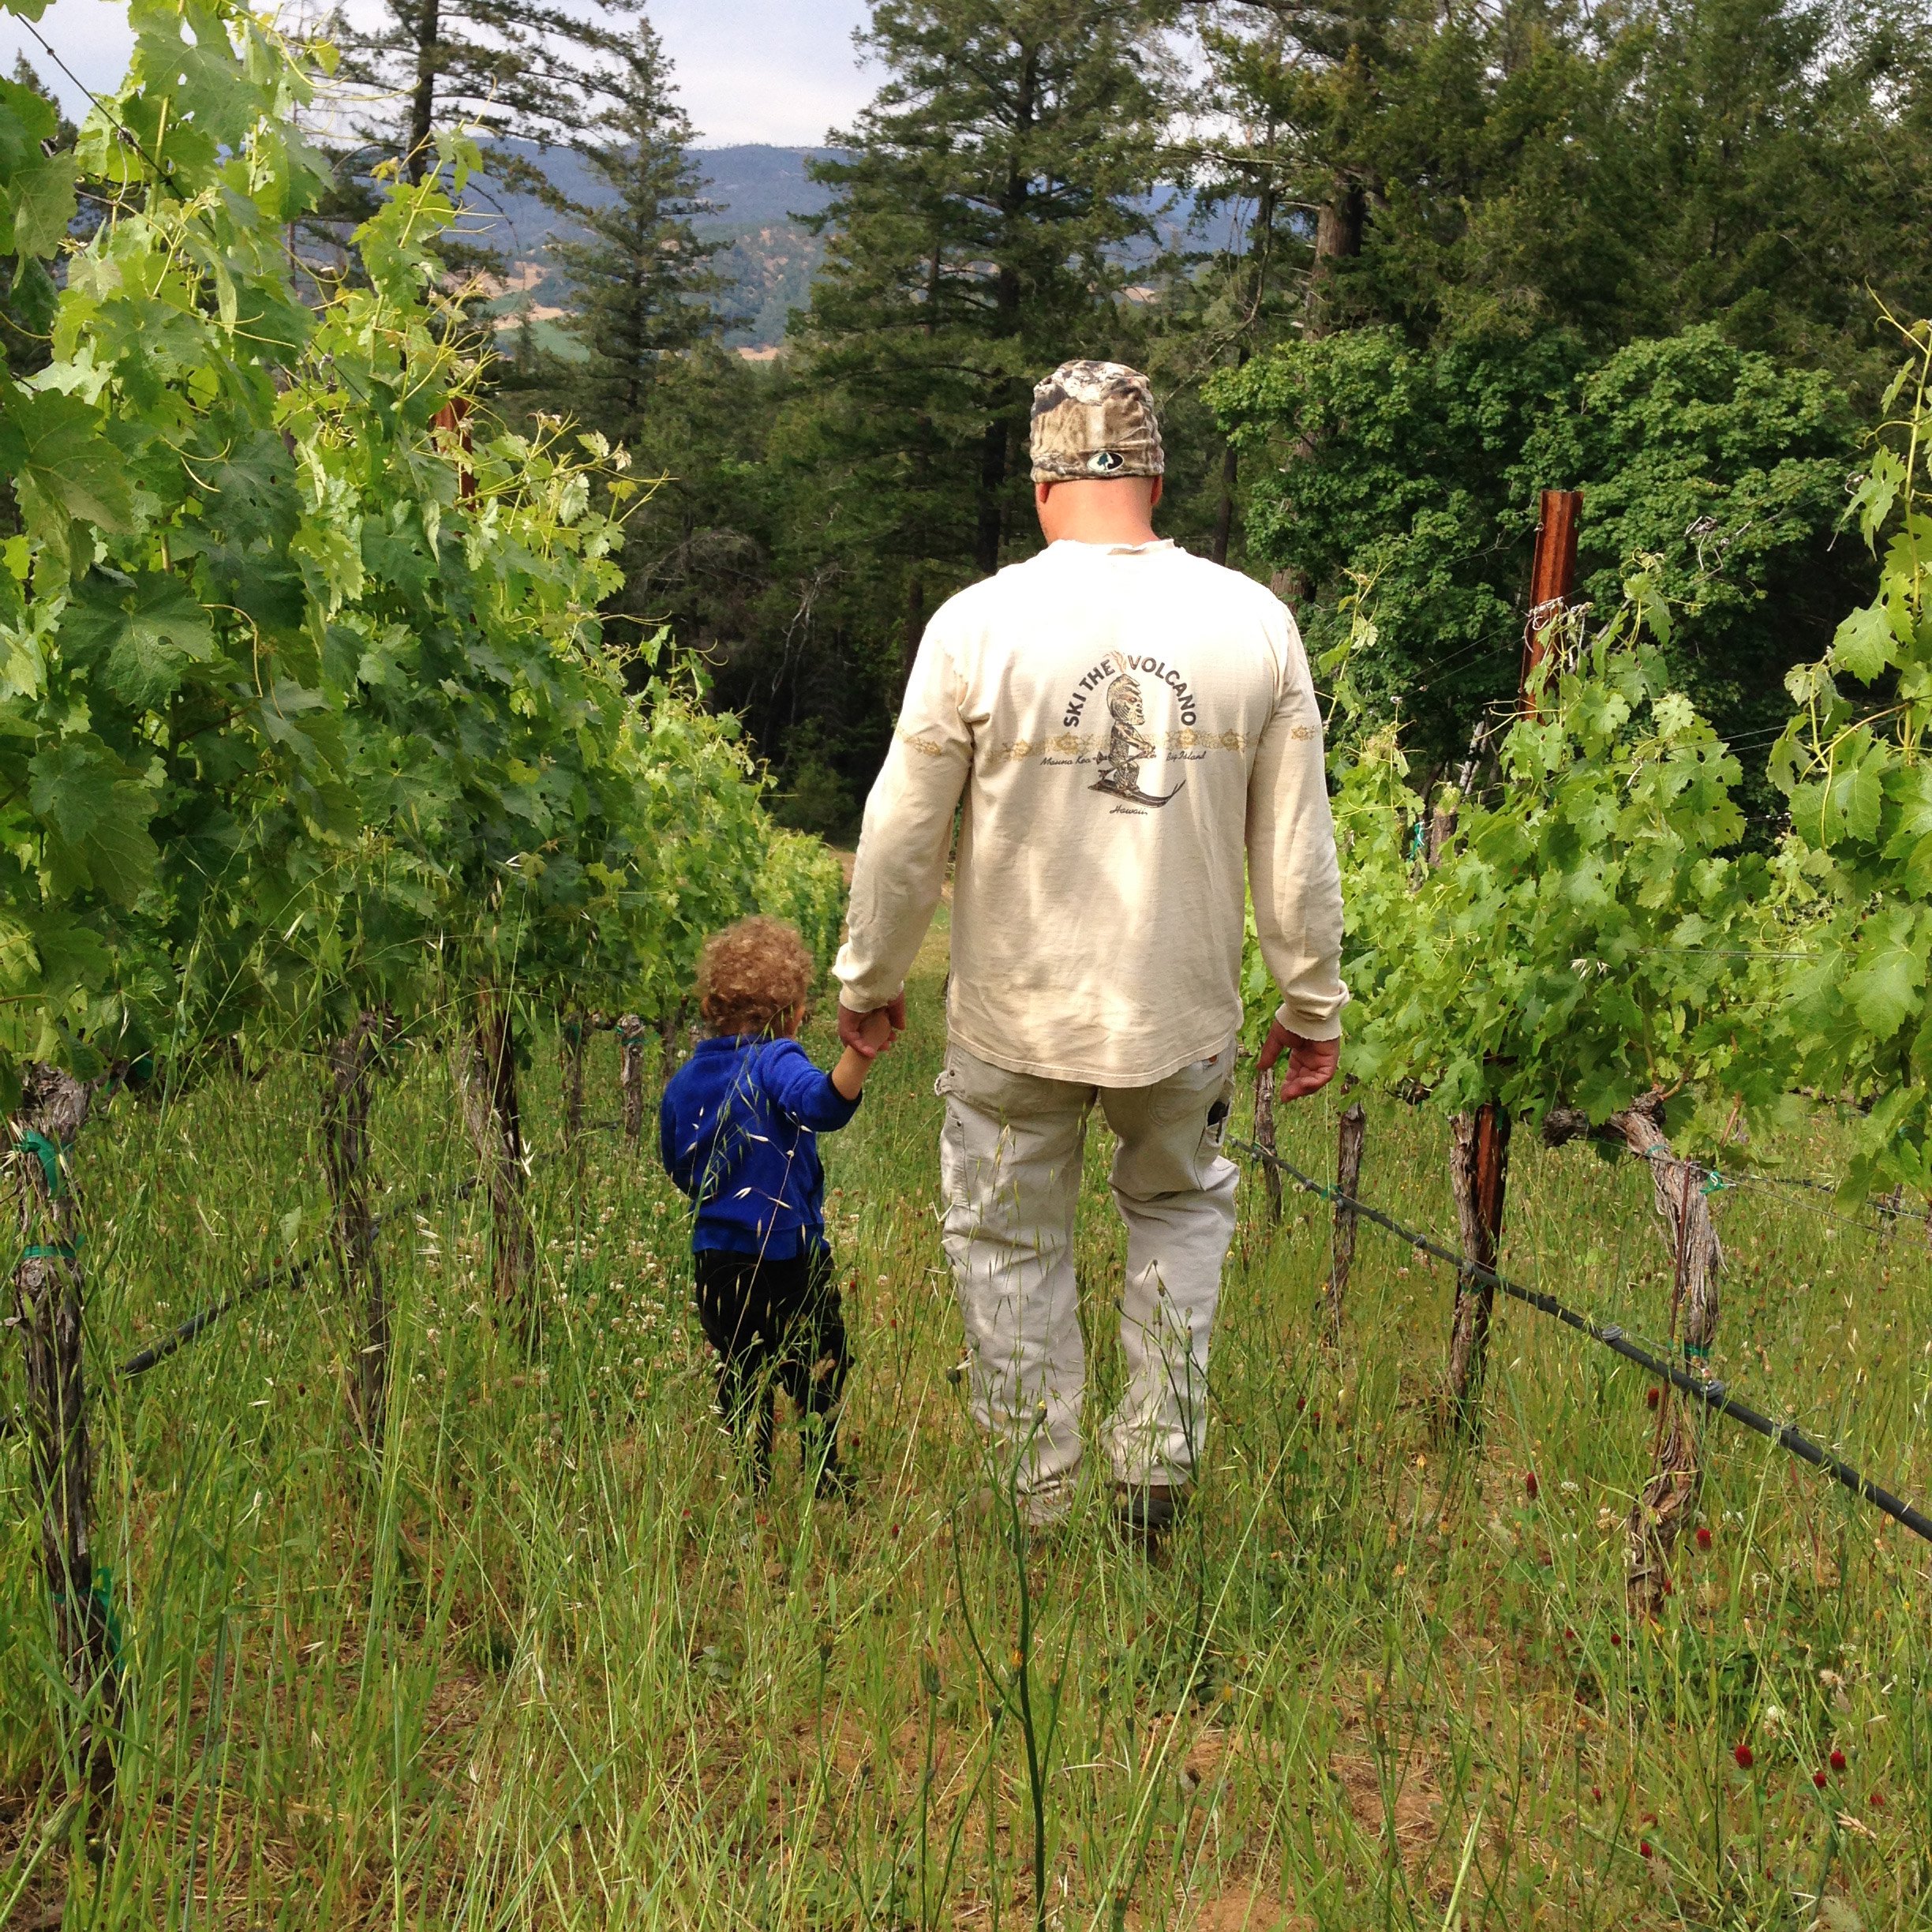 Man and little boy walking hand in hand through the vineyard